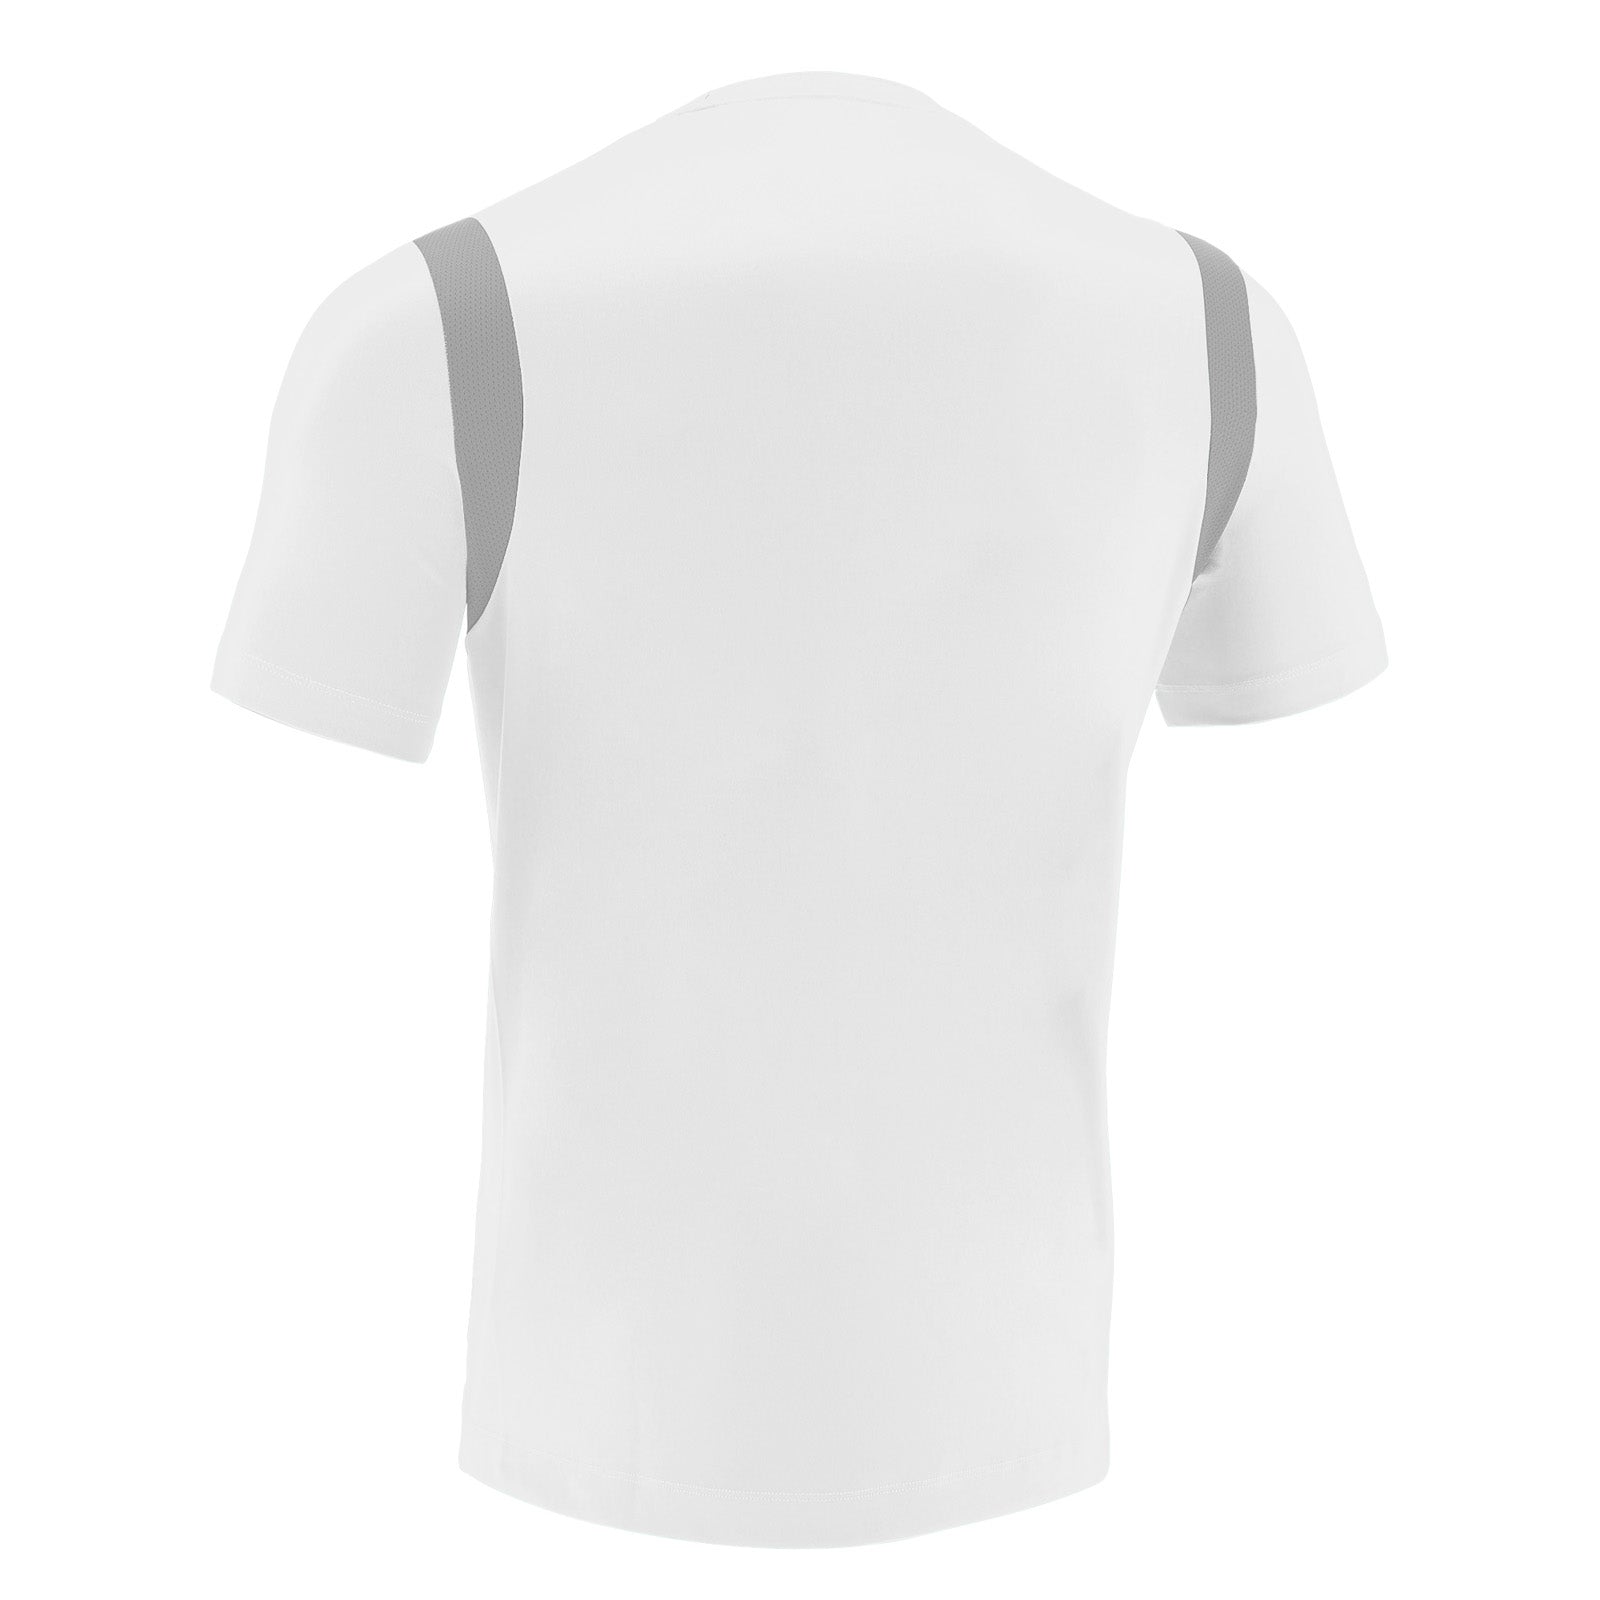 Photo of the Irish Squash 'Rodders' Match Day Shirt in White, back view